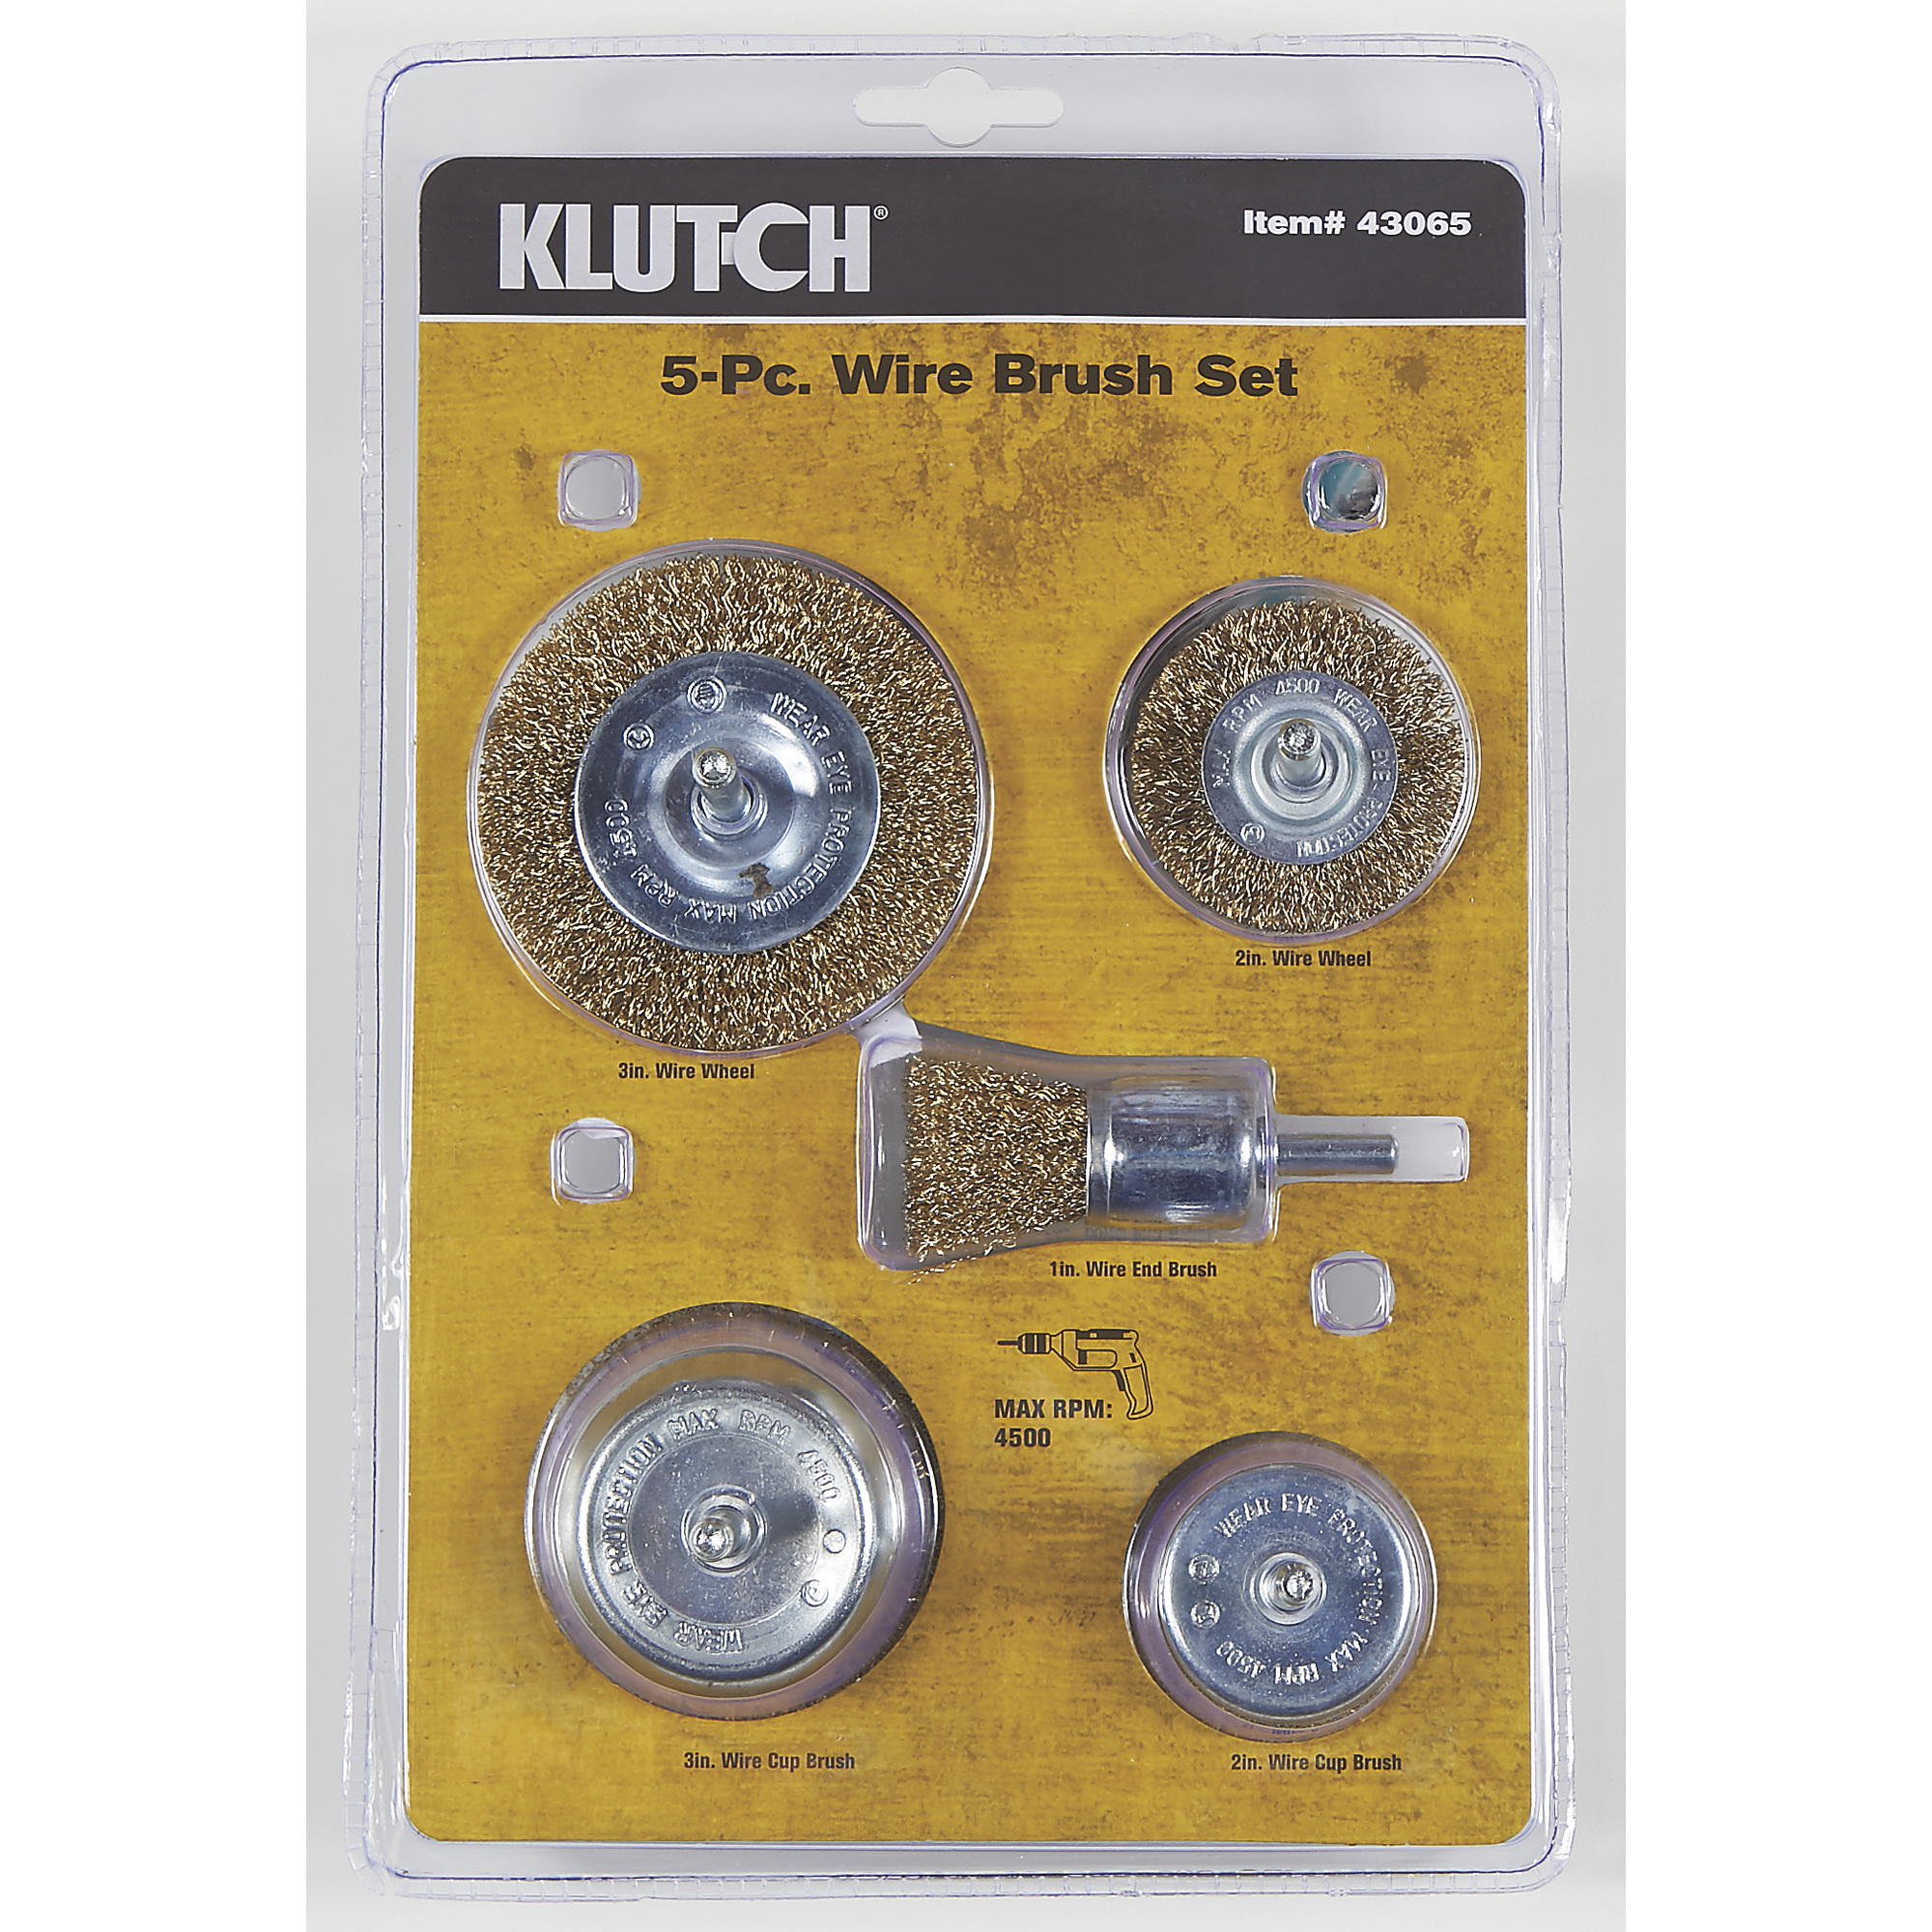 Klutch 5-Pc. Wire Brush Kit